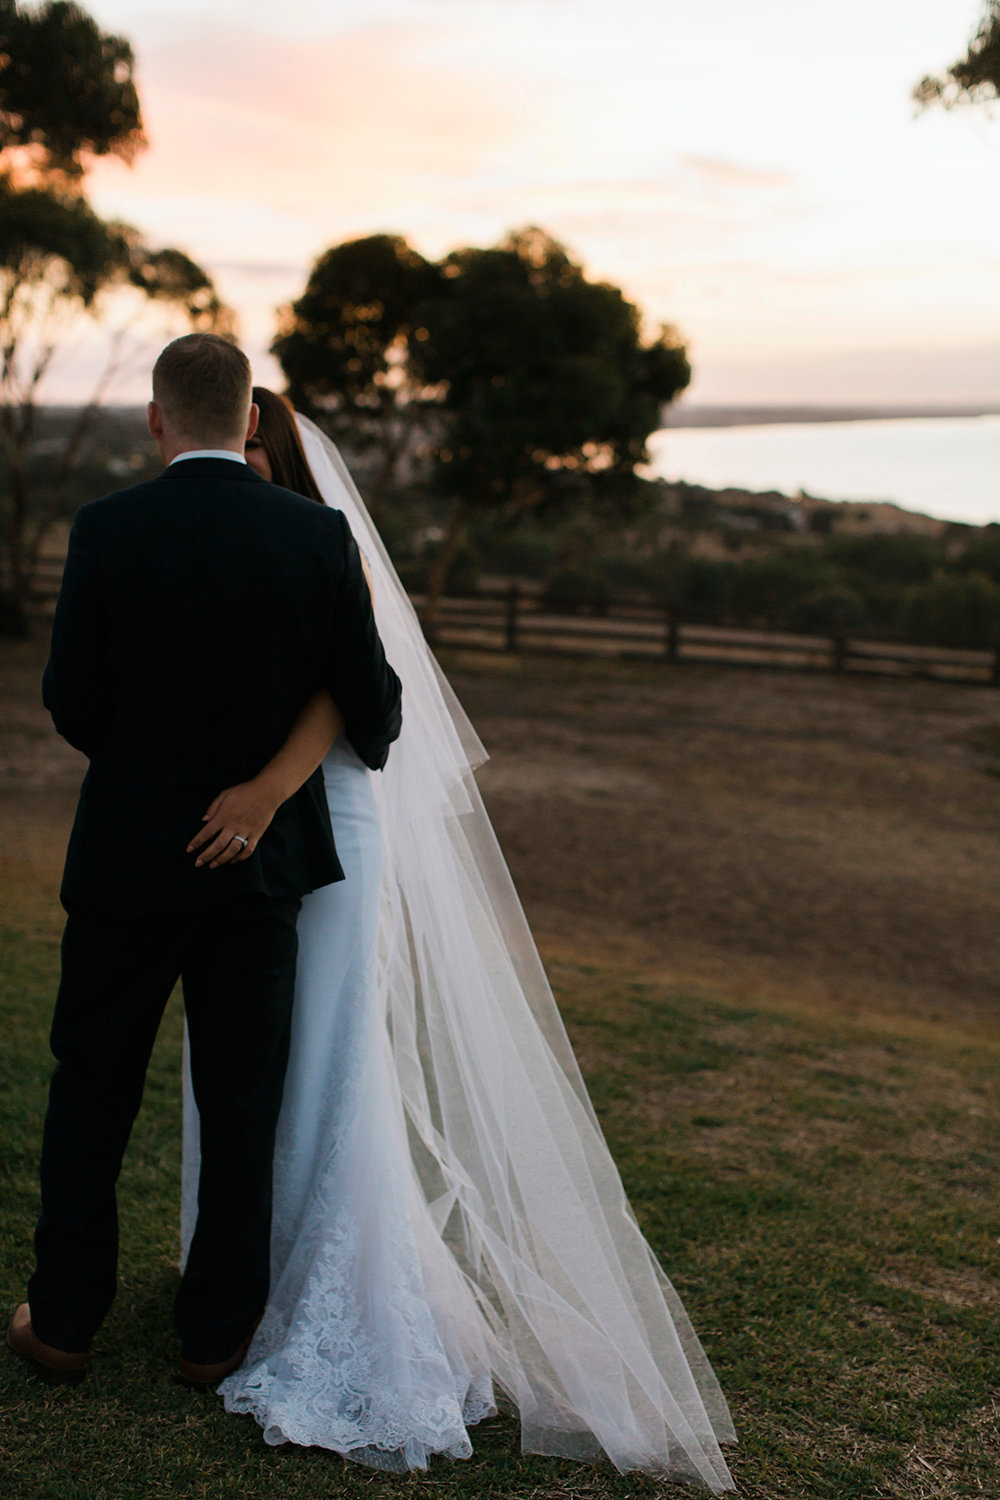 Sunset moments by Geelong Wedding Photographer Monika Berry